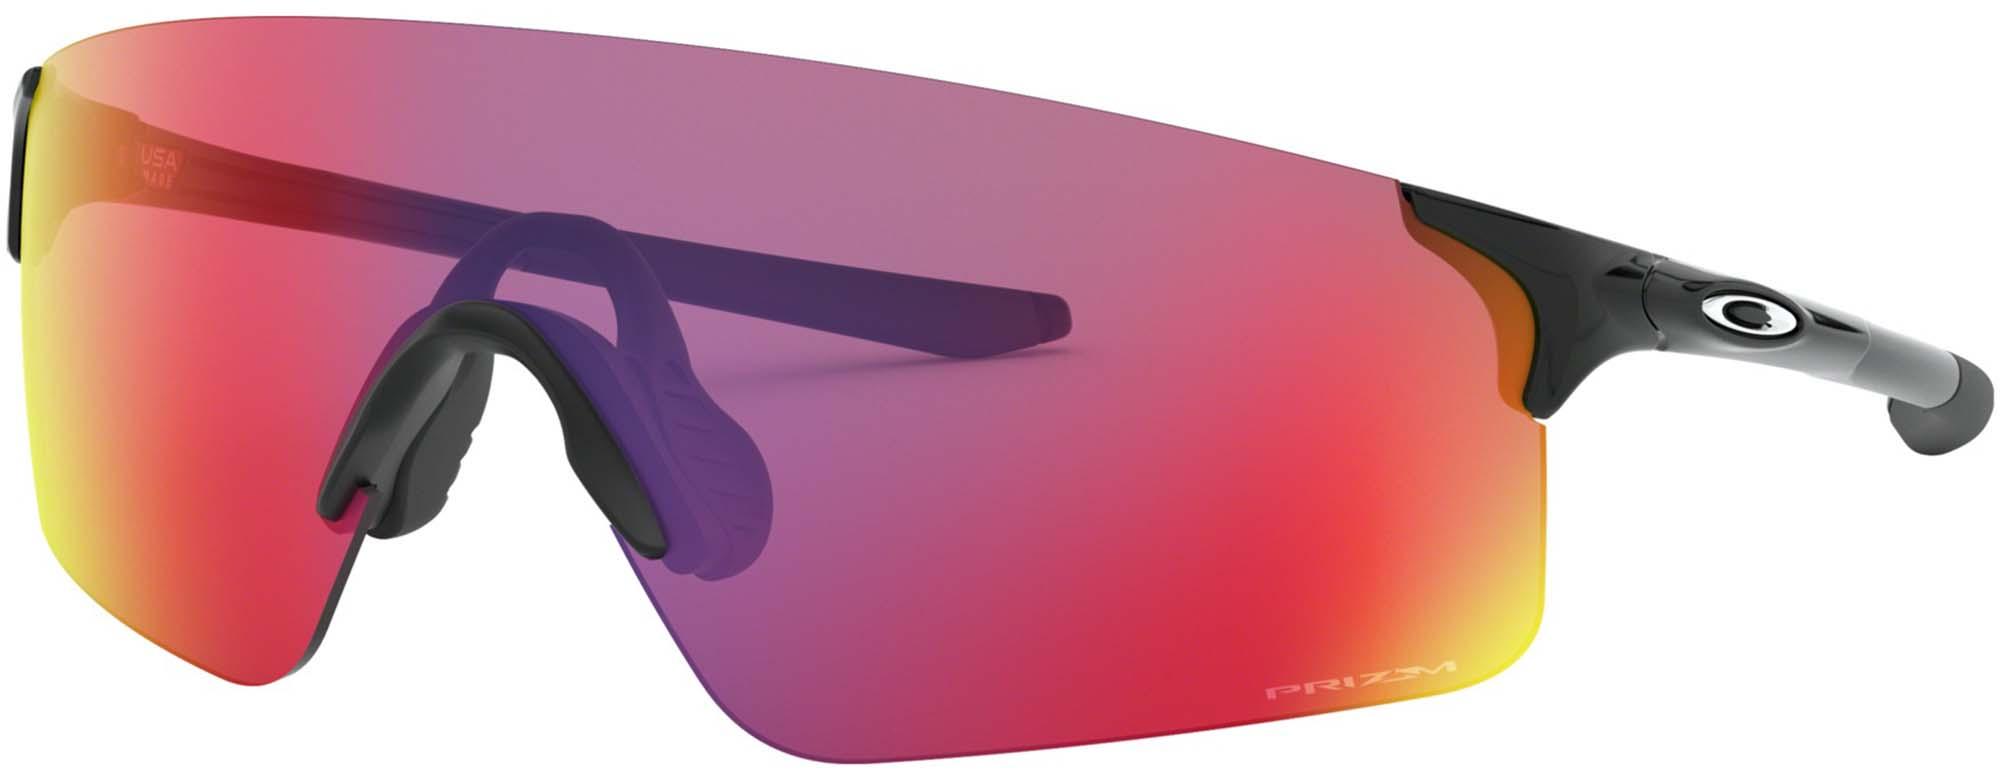 Oakley Evzero Blades Polished Black Sunglasses  Polished Black